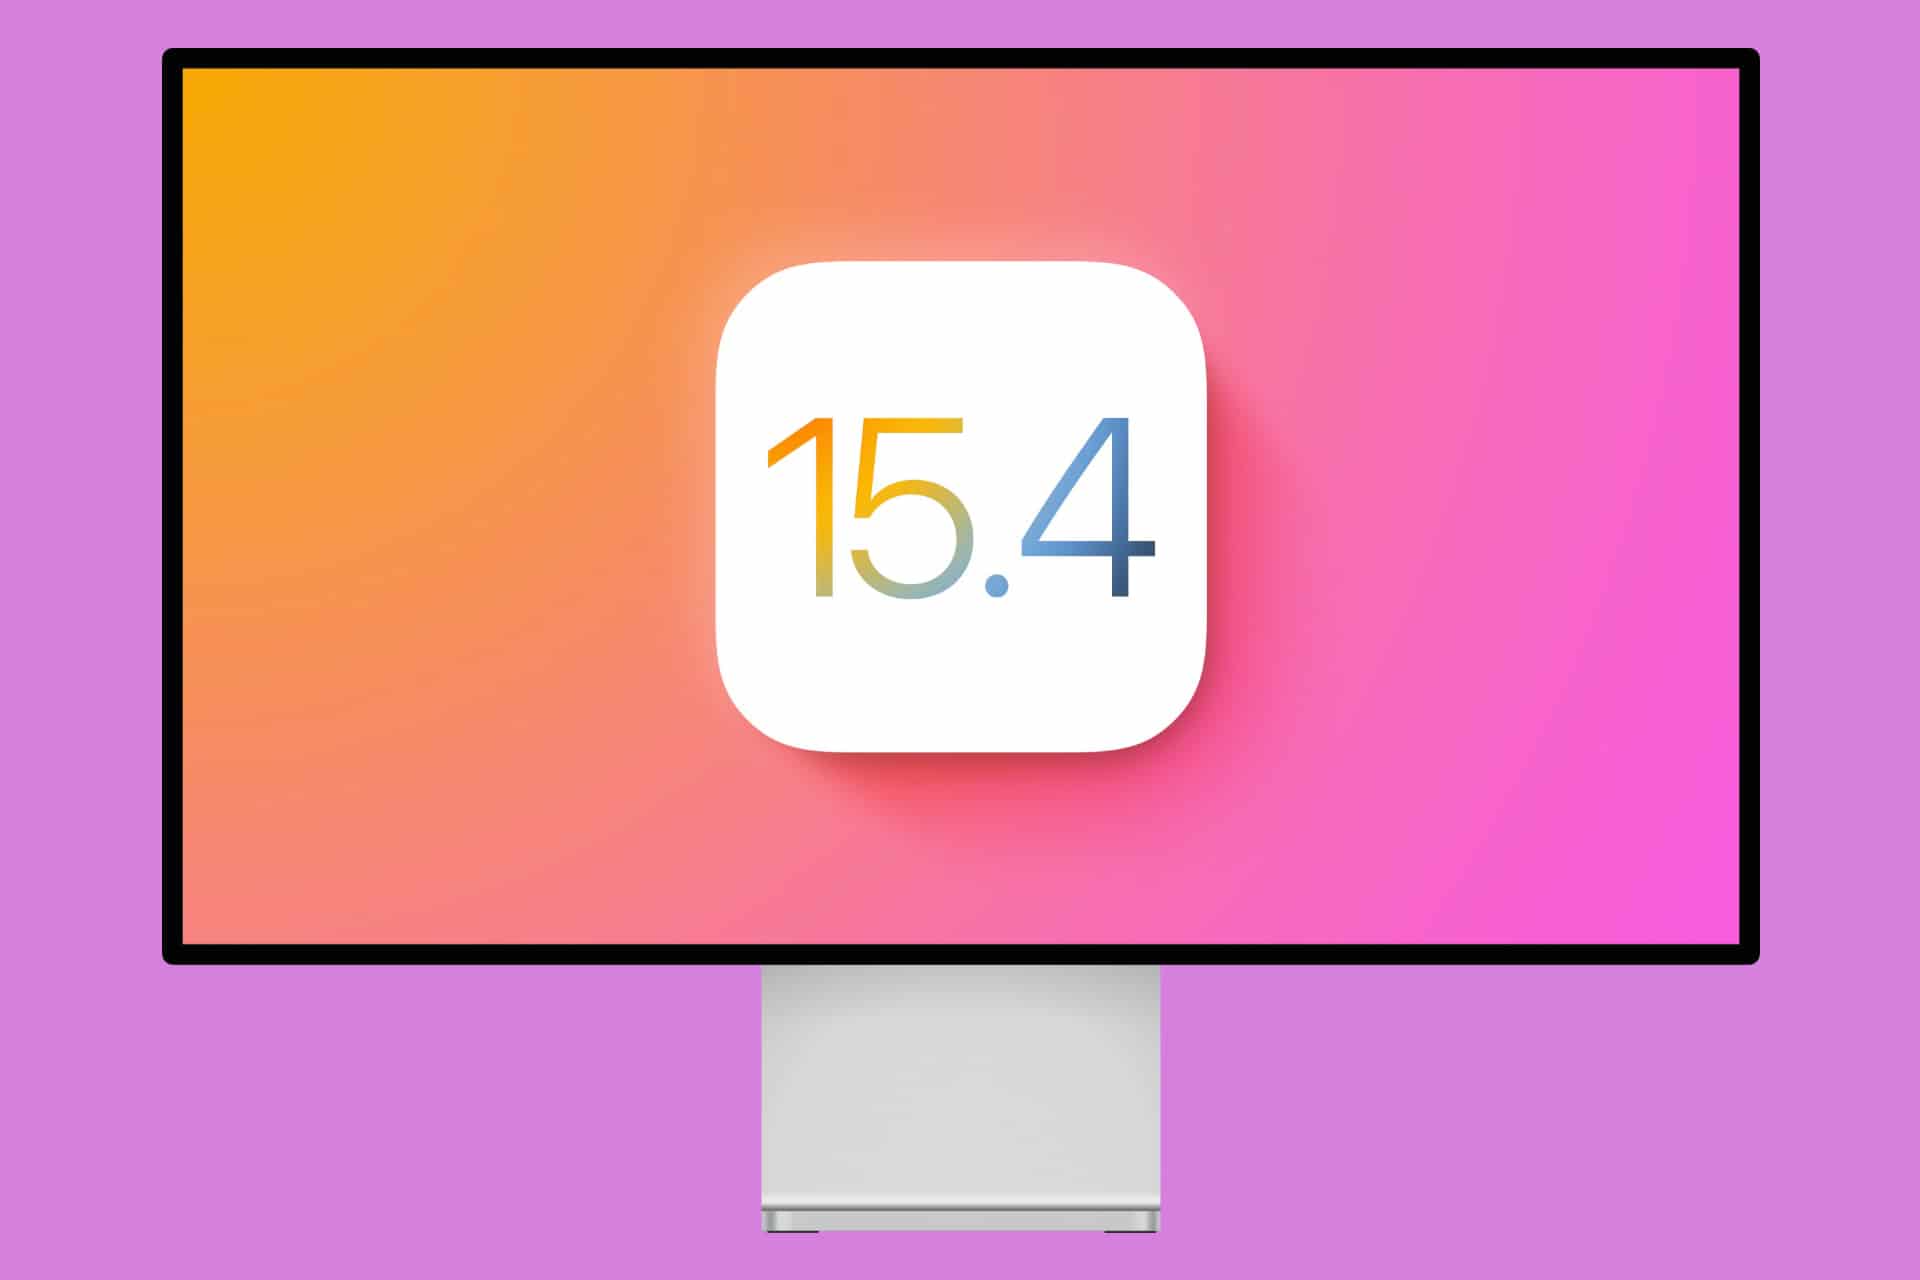 Studio Display iOS 15.4